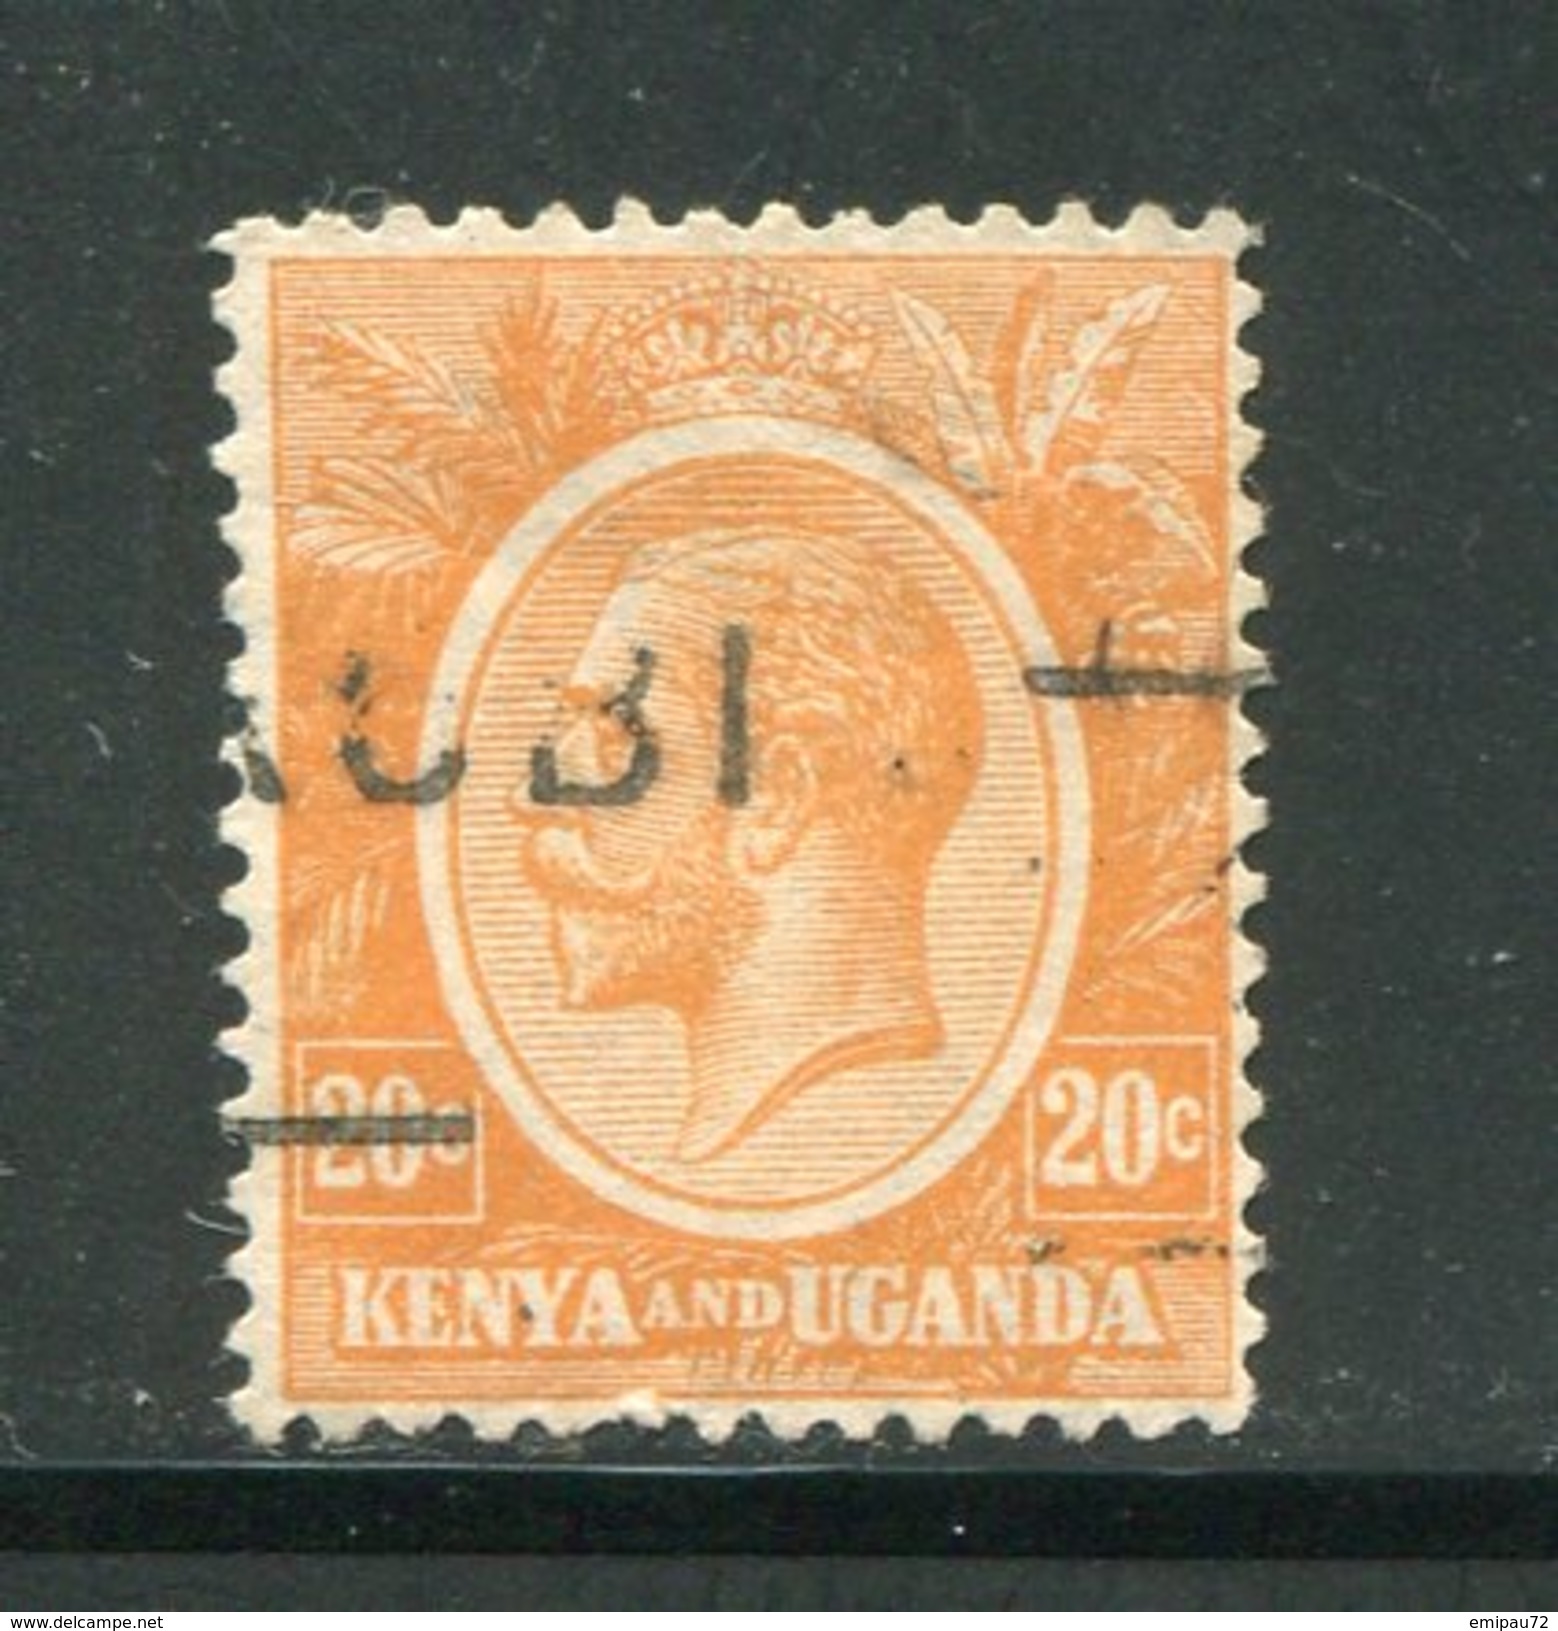 KENYA Et OUGANDA- Y&T N°6- Oblitéré - Kenya & Ouganda